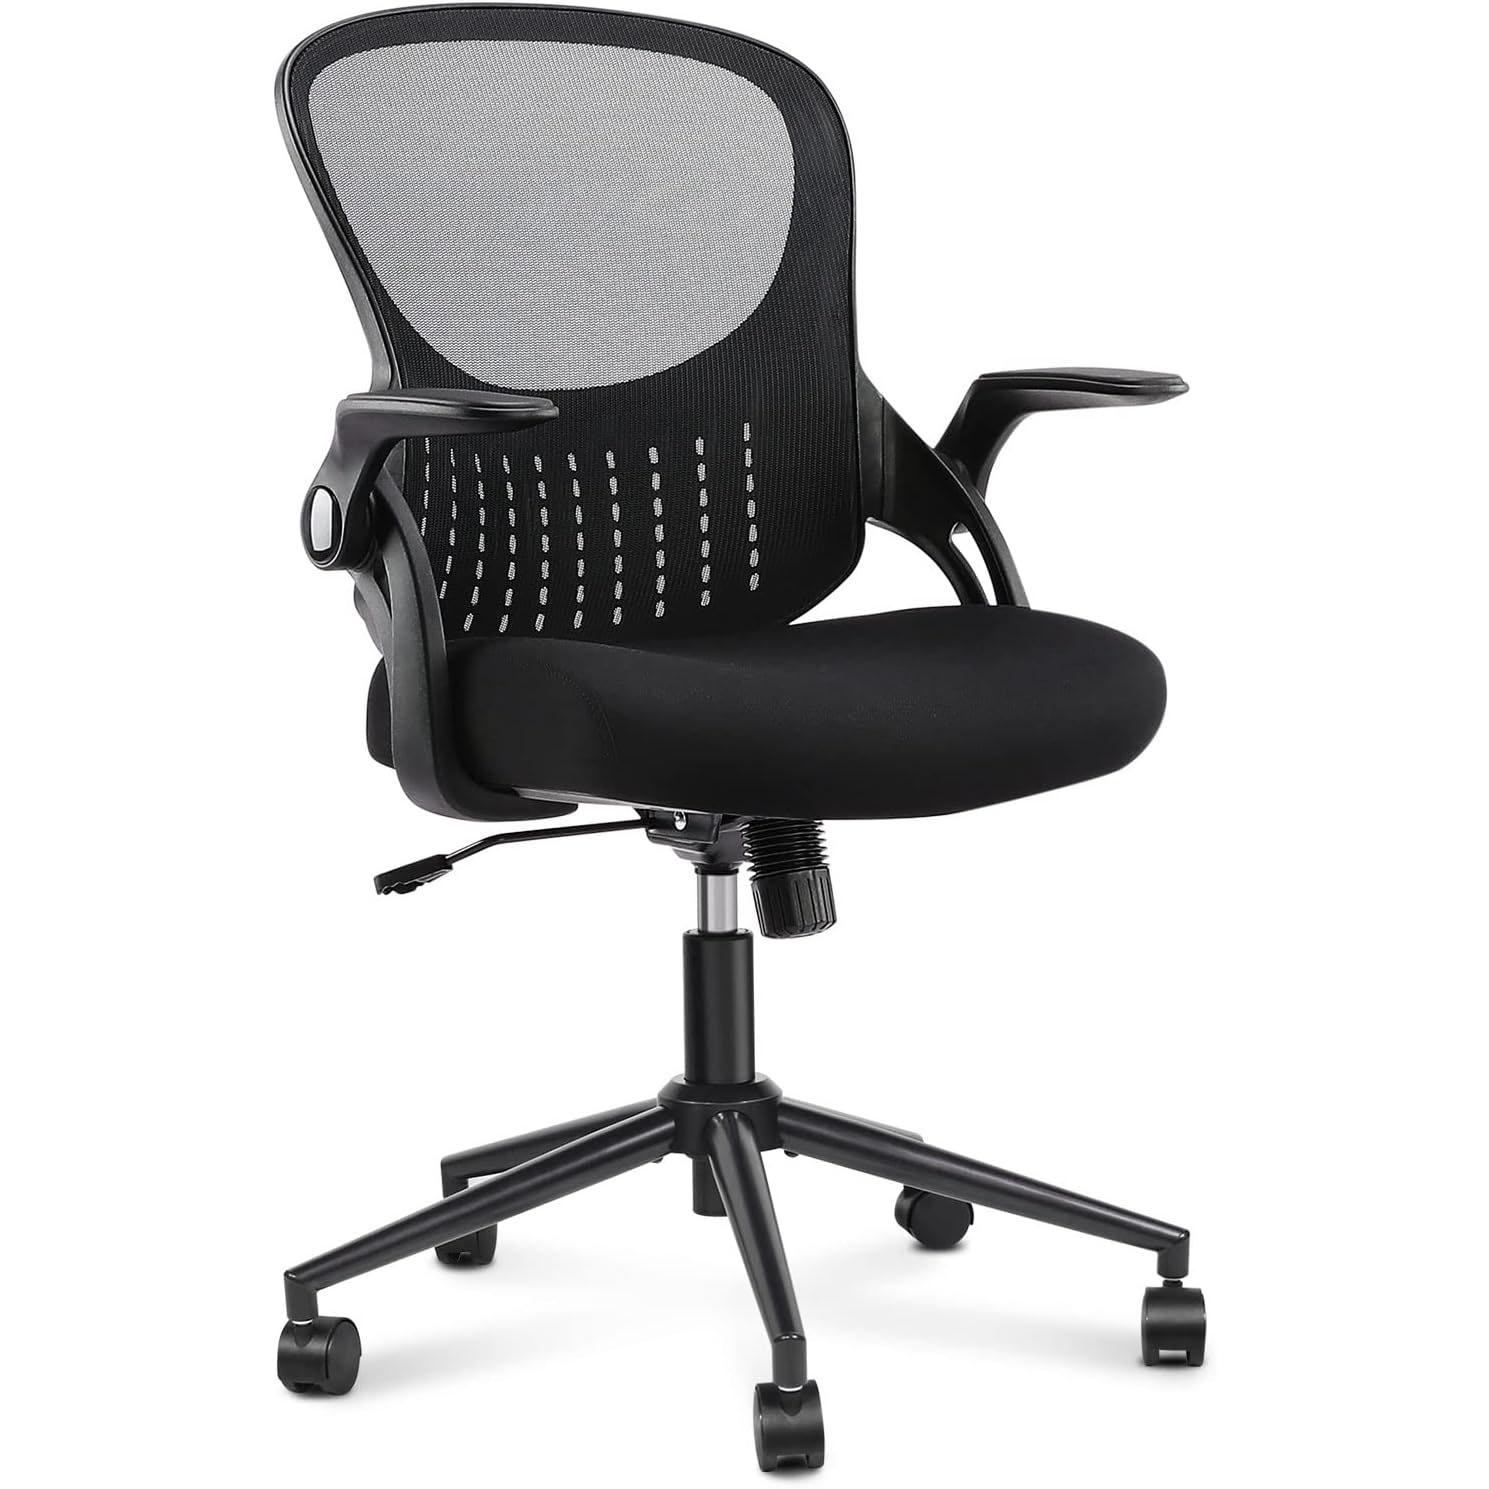 Smug Ergonomic Desk Home Office Mesh Chair for $49 Shipped